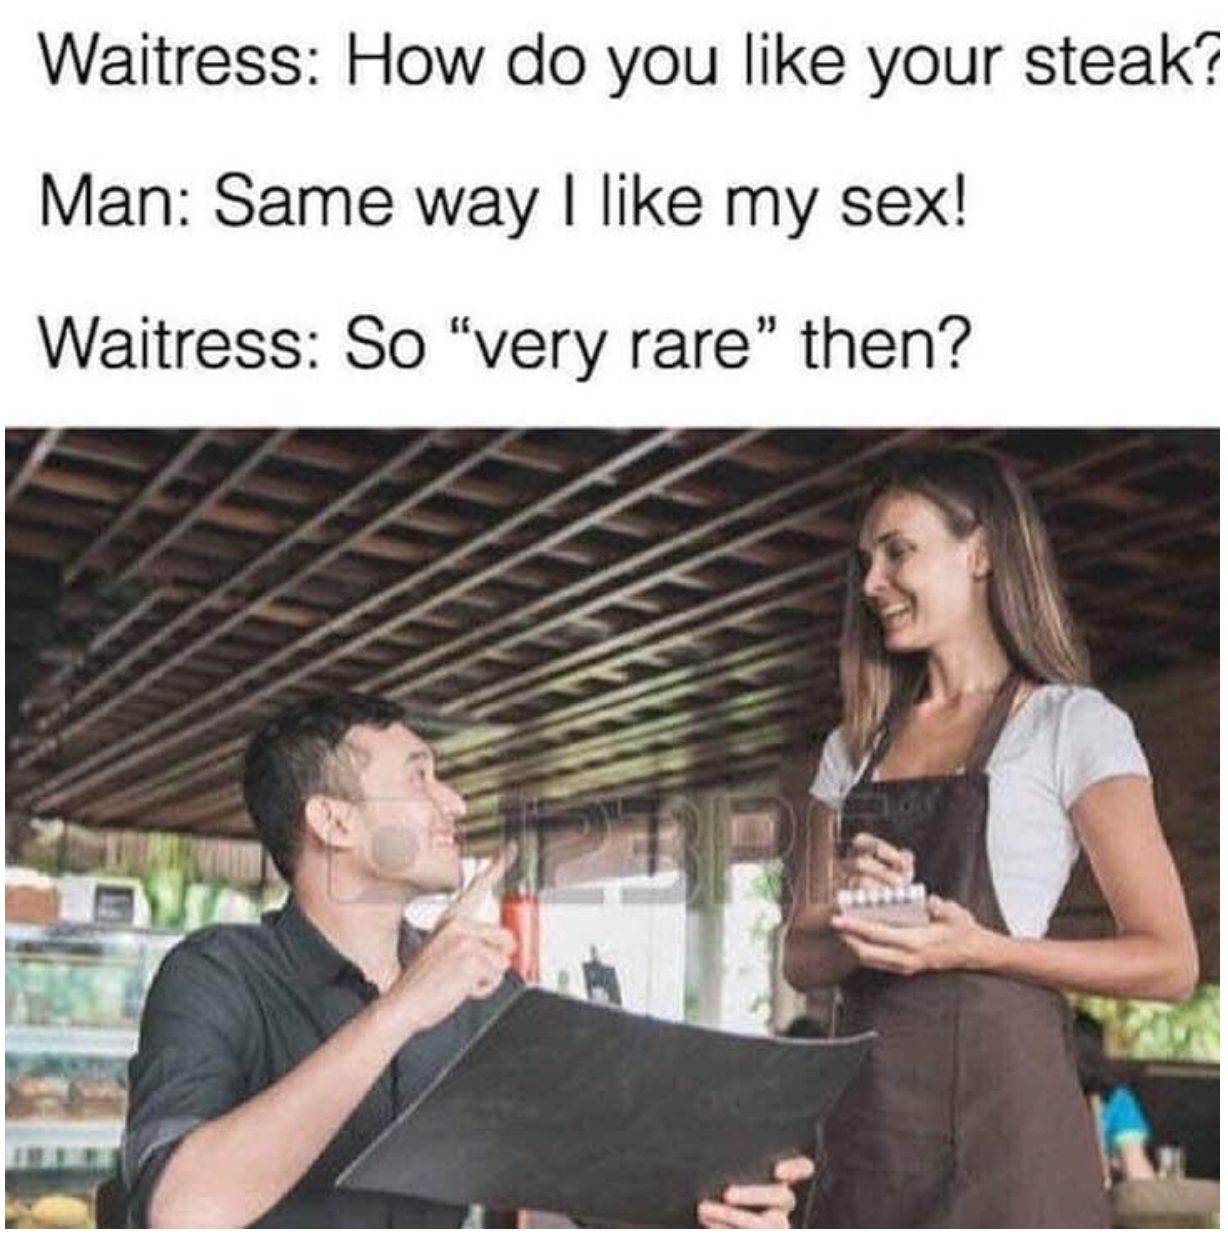 how do you like your steak?, same way i like my sex, so very rare then